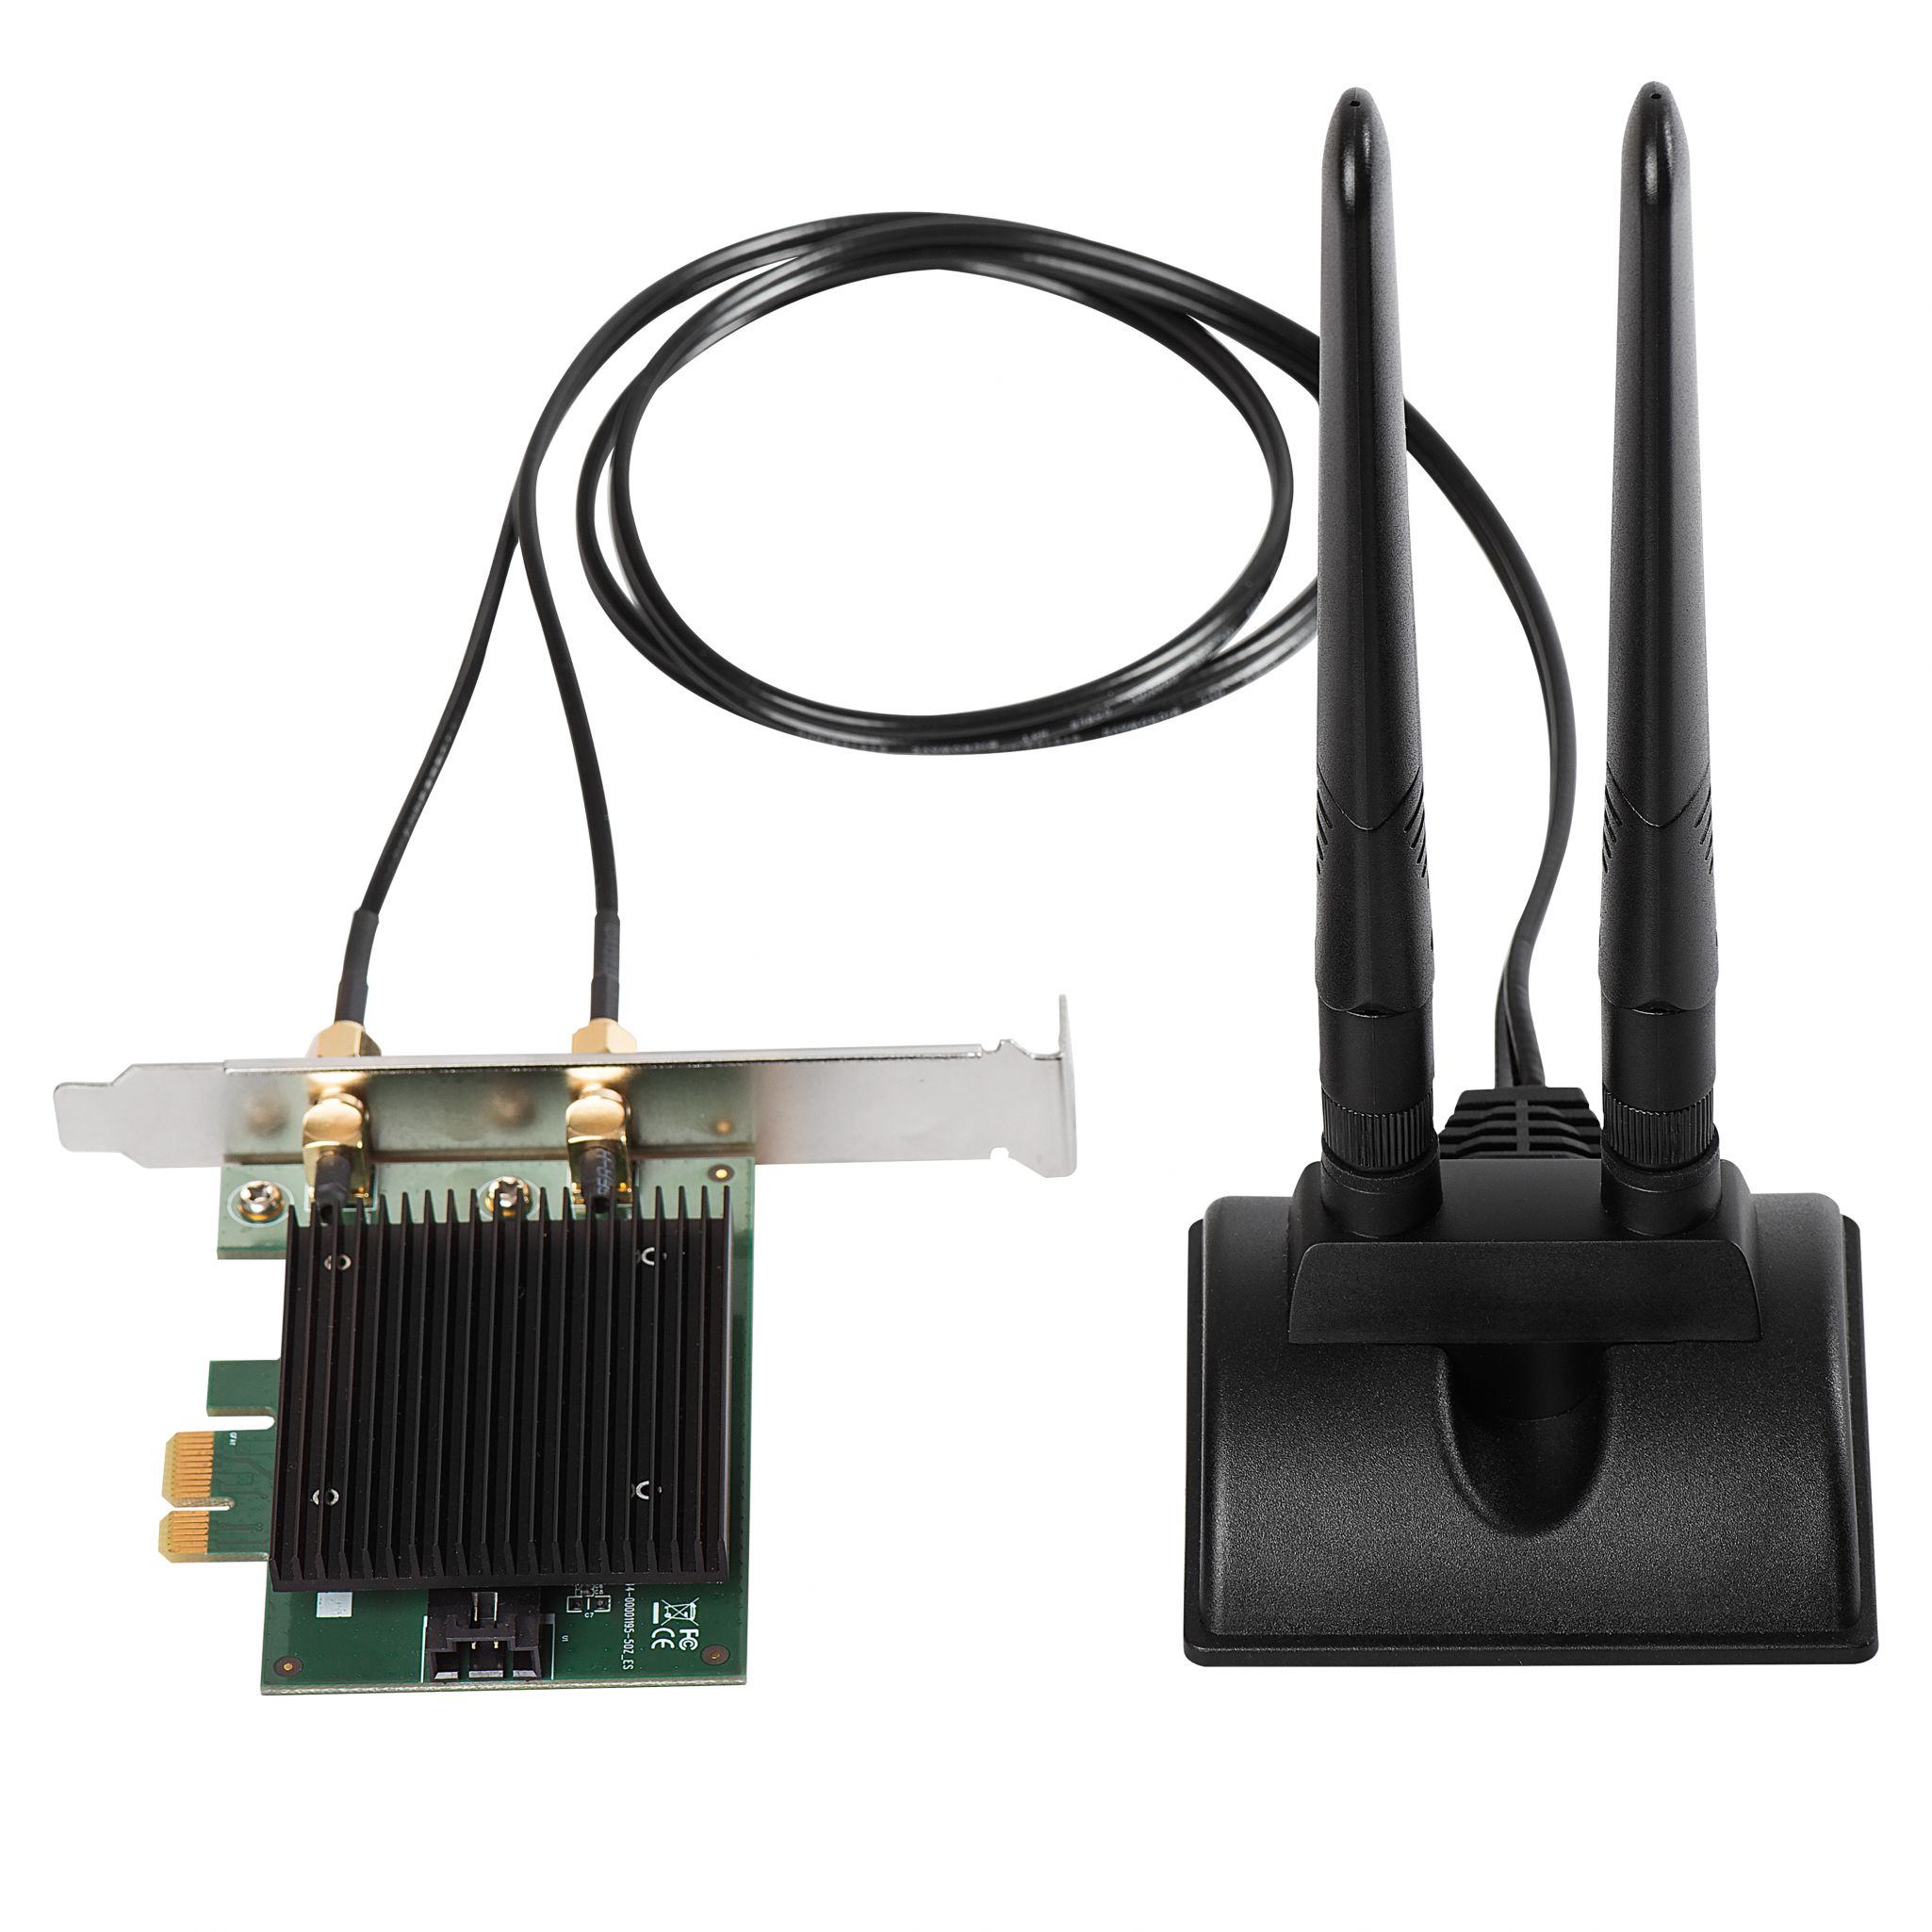 AX916C MSI Dual Band AX 200 WiFi 6 Bluetooth 5.0 Long Range Wireless MU-MIMO PCIe Network Adapter Card